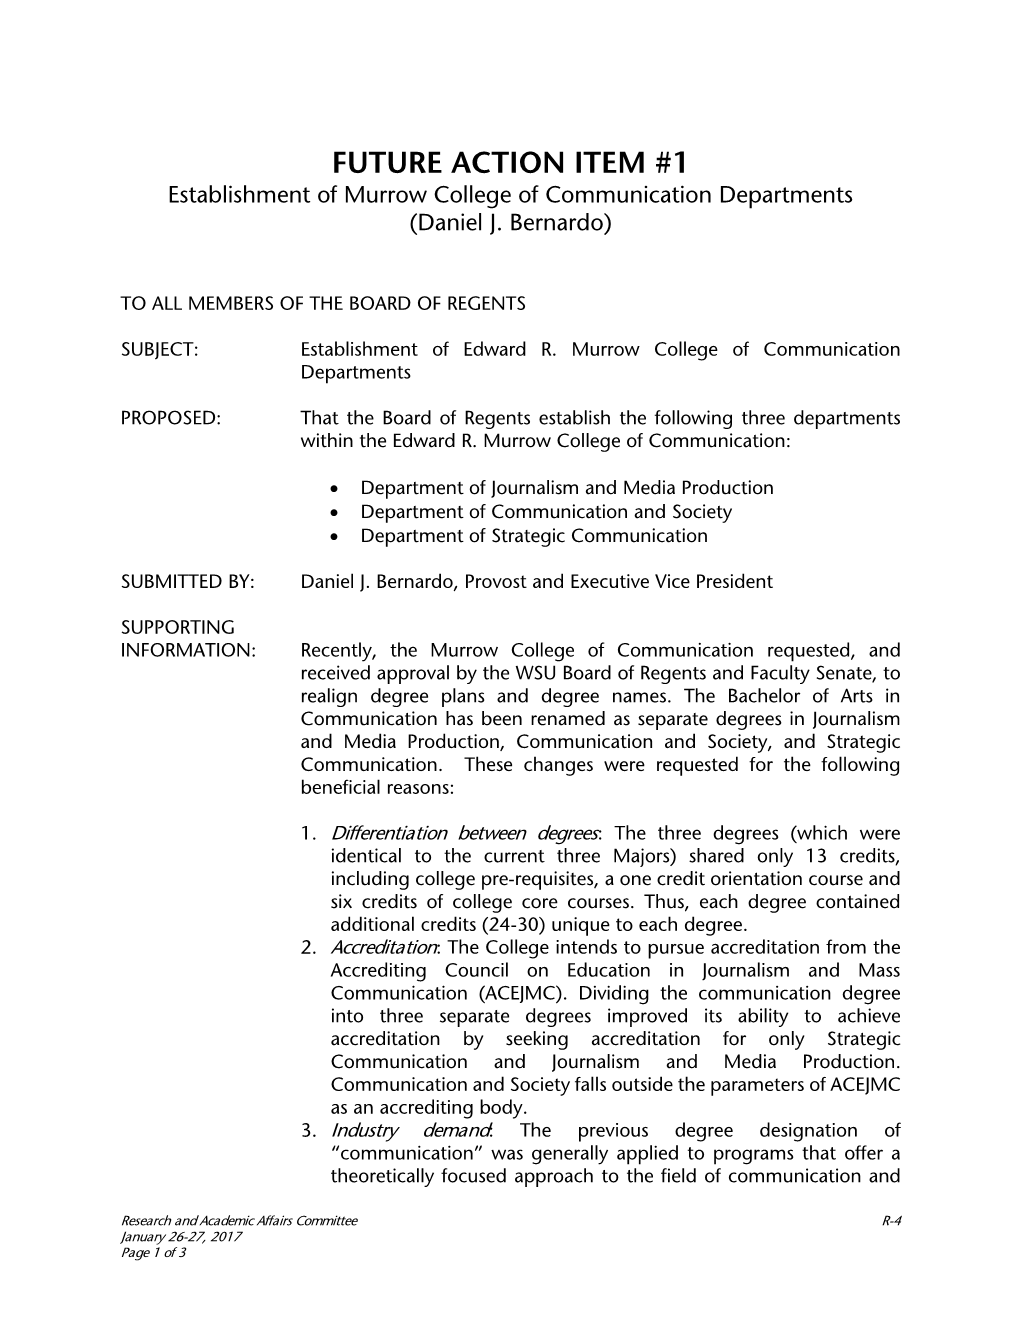 FUTURE ACTION ITEM #1 Establishment of Murrow College of Communication Departments (Daniel J